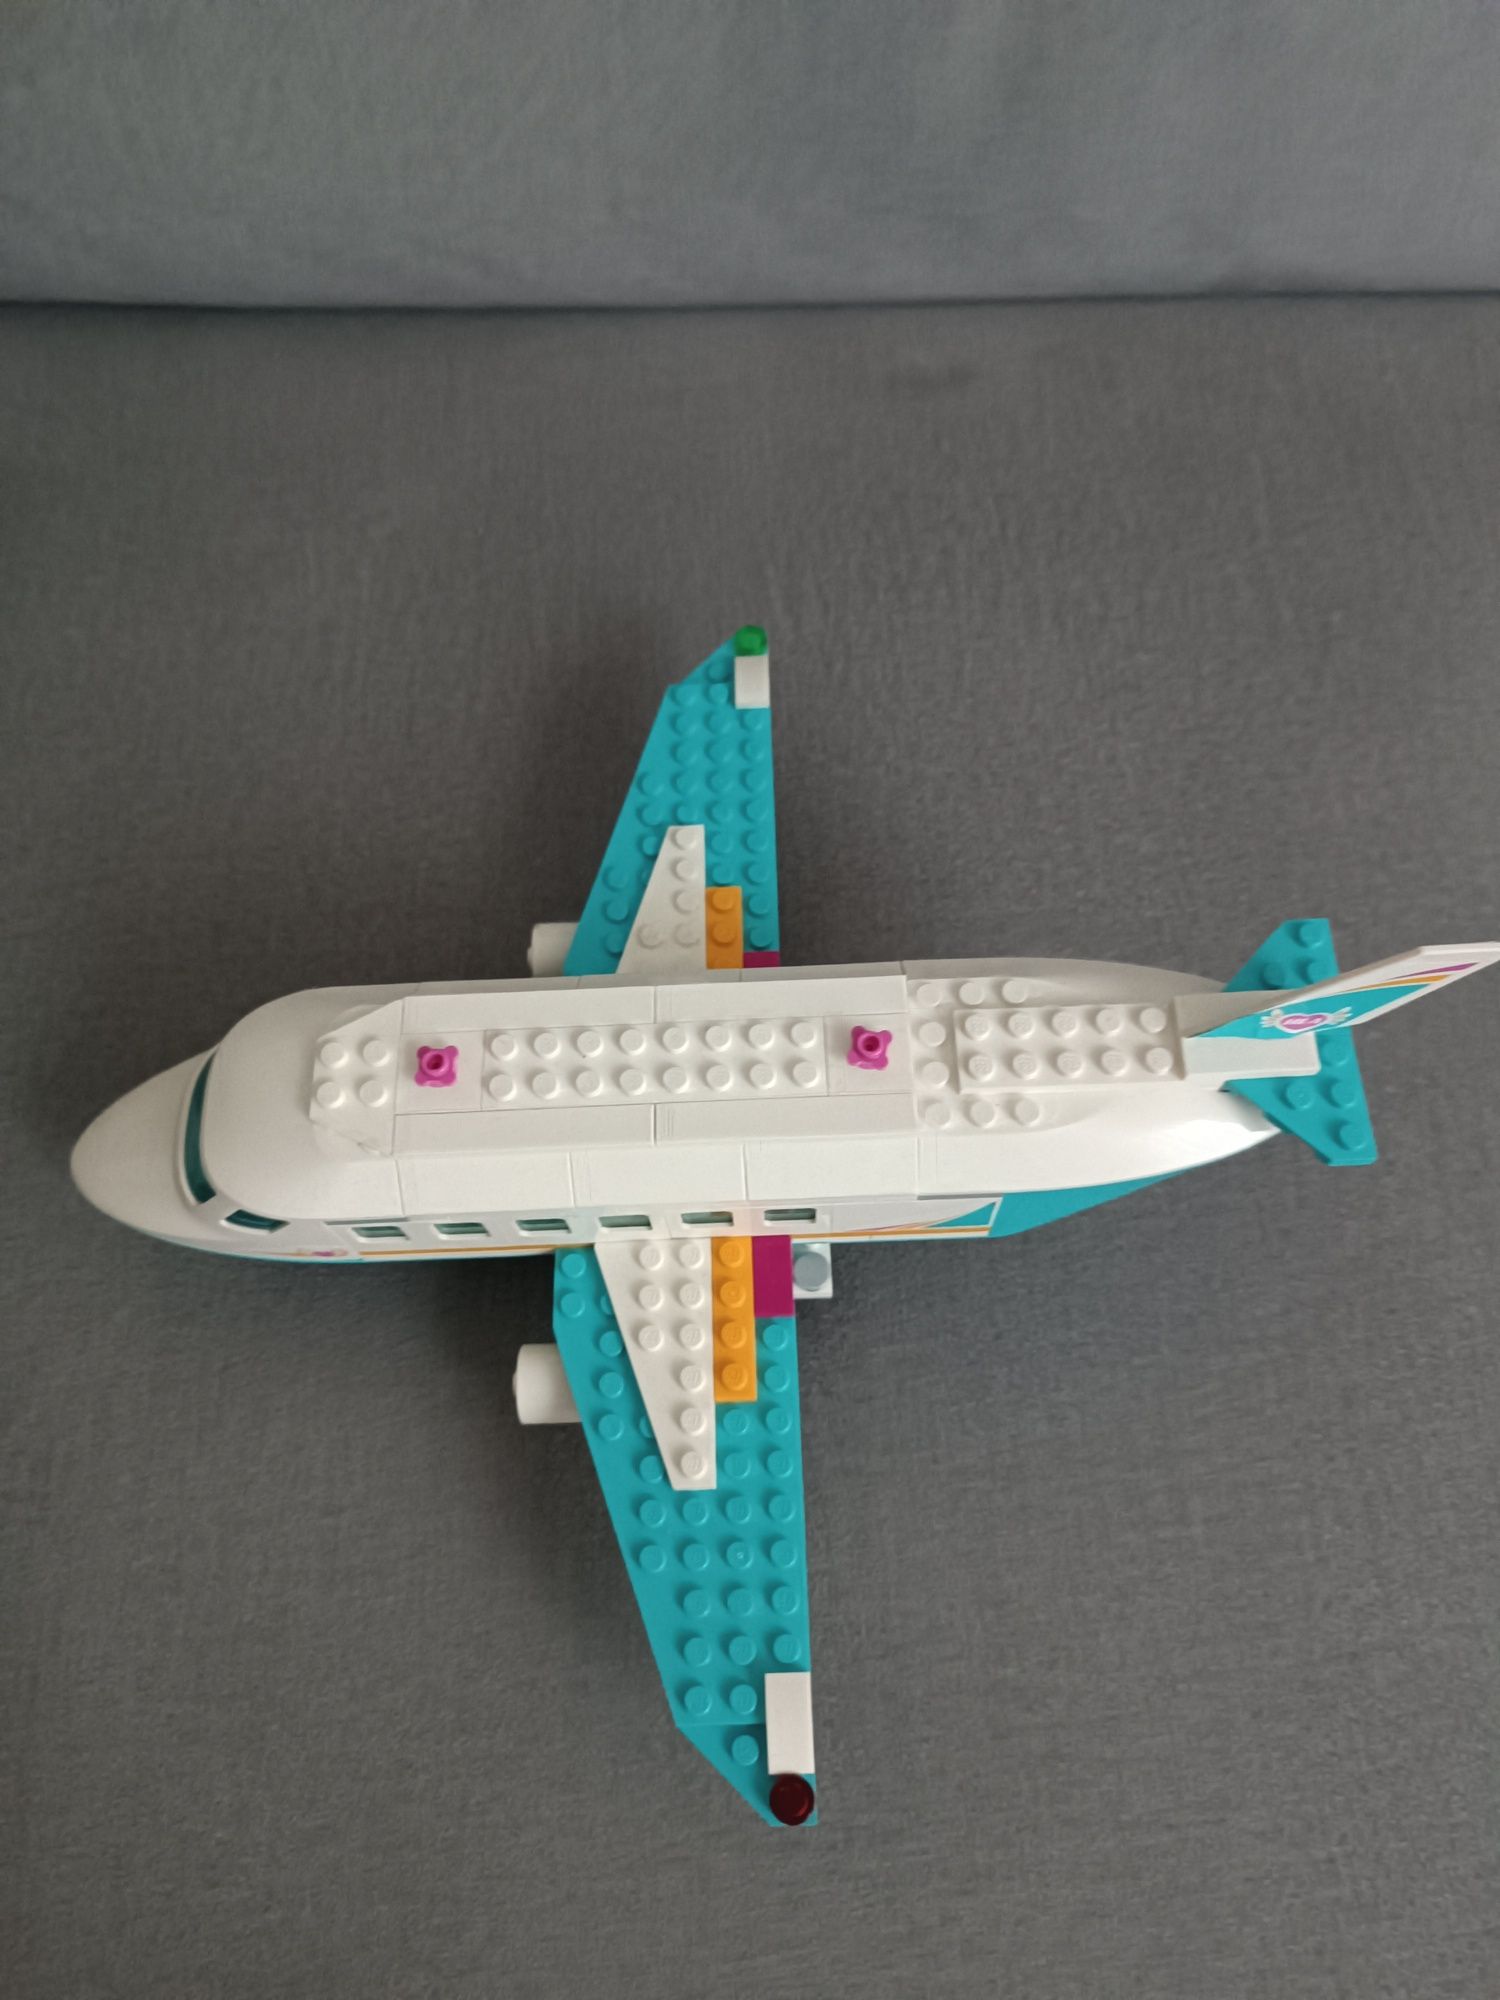 Klocki LEGO friends samolot